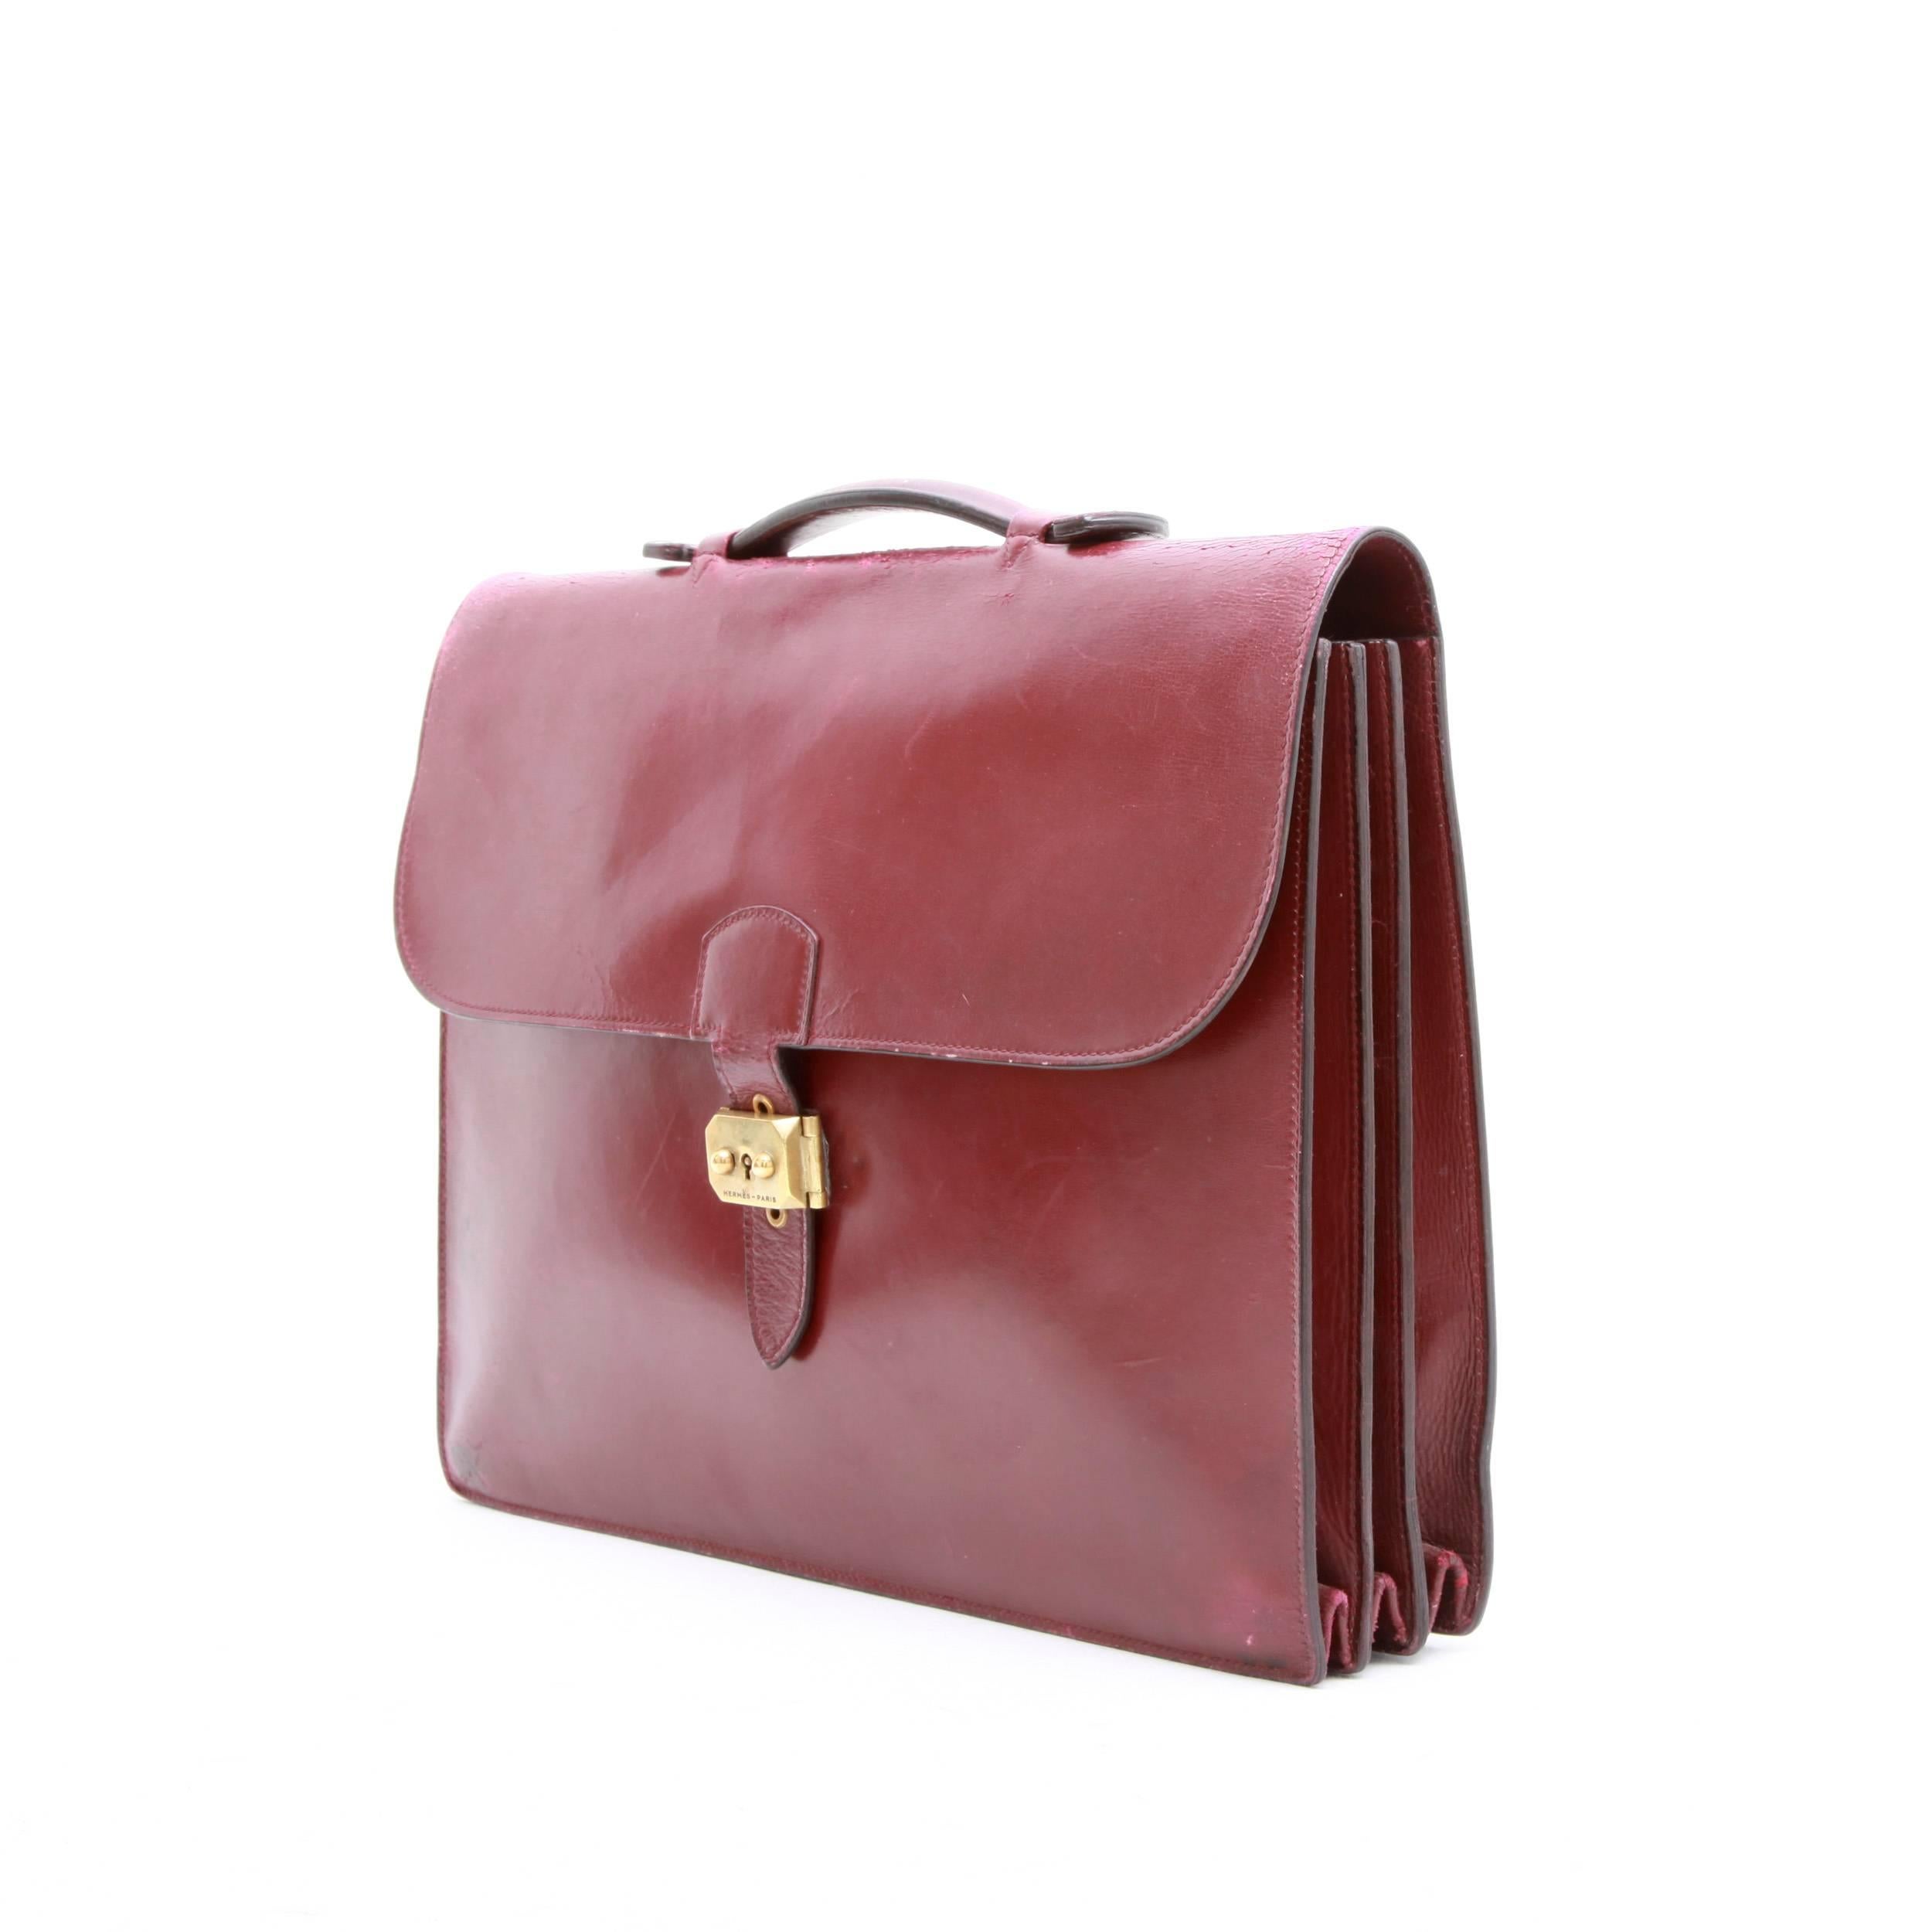 Brown HERMES Vintage Satchel Bag in H Red Box Leather